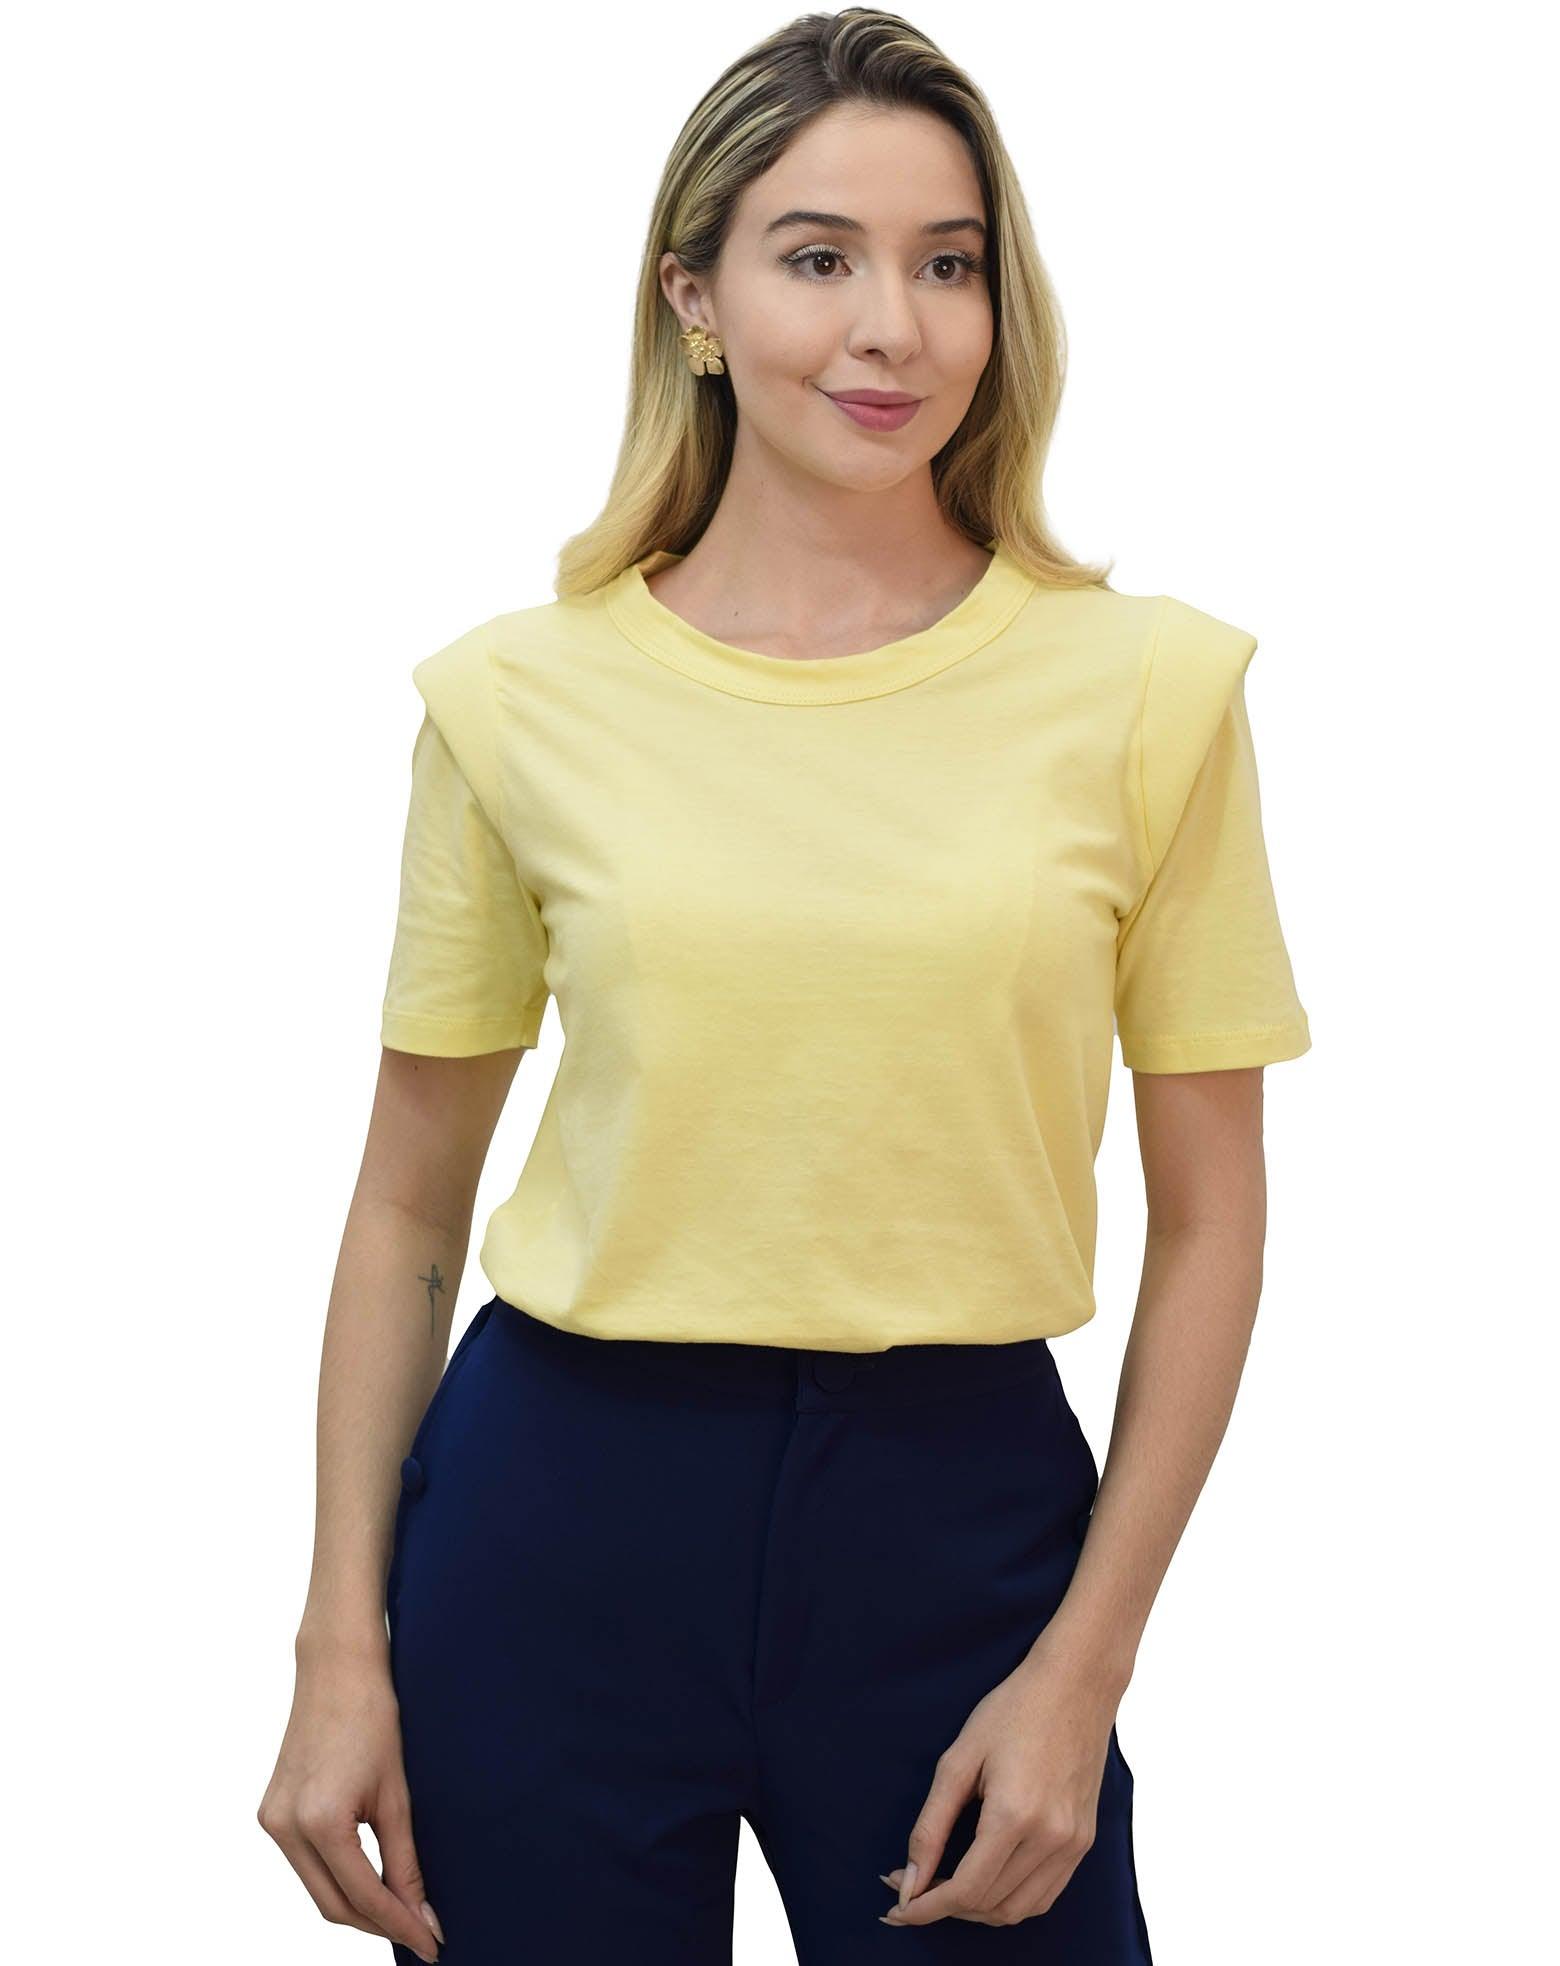 Blusa T-Shirt Amarela - jalecos-mania Algodão, Amarelo, Blusa, Blusa Feminina, Feminino, Gola O, Jalecos Mania, Manga Curta, Tshirts